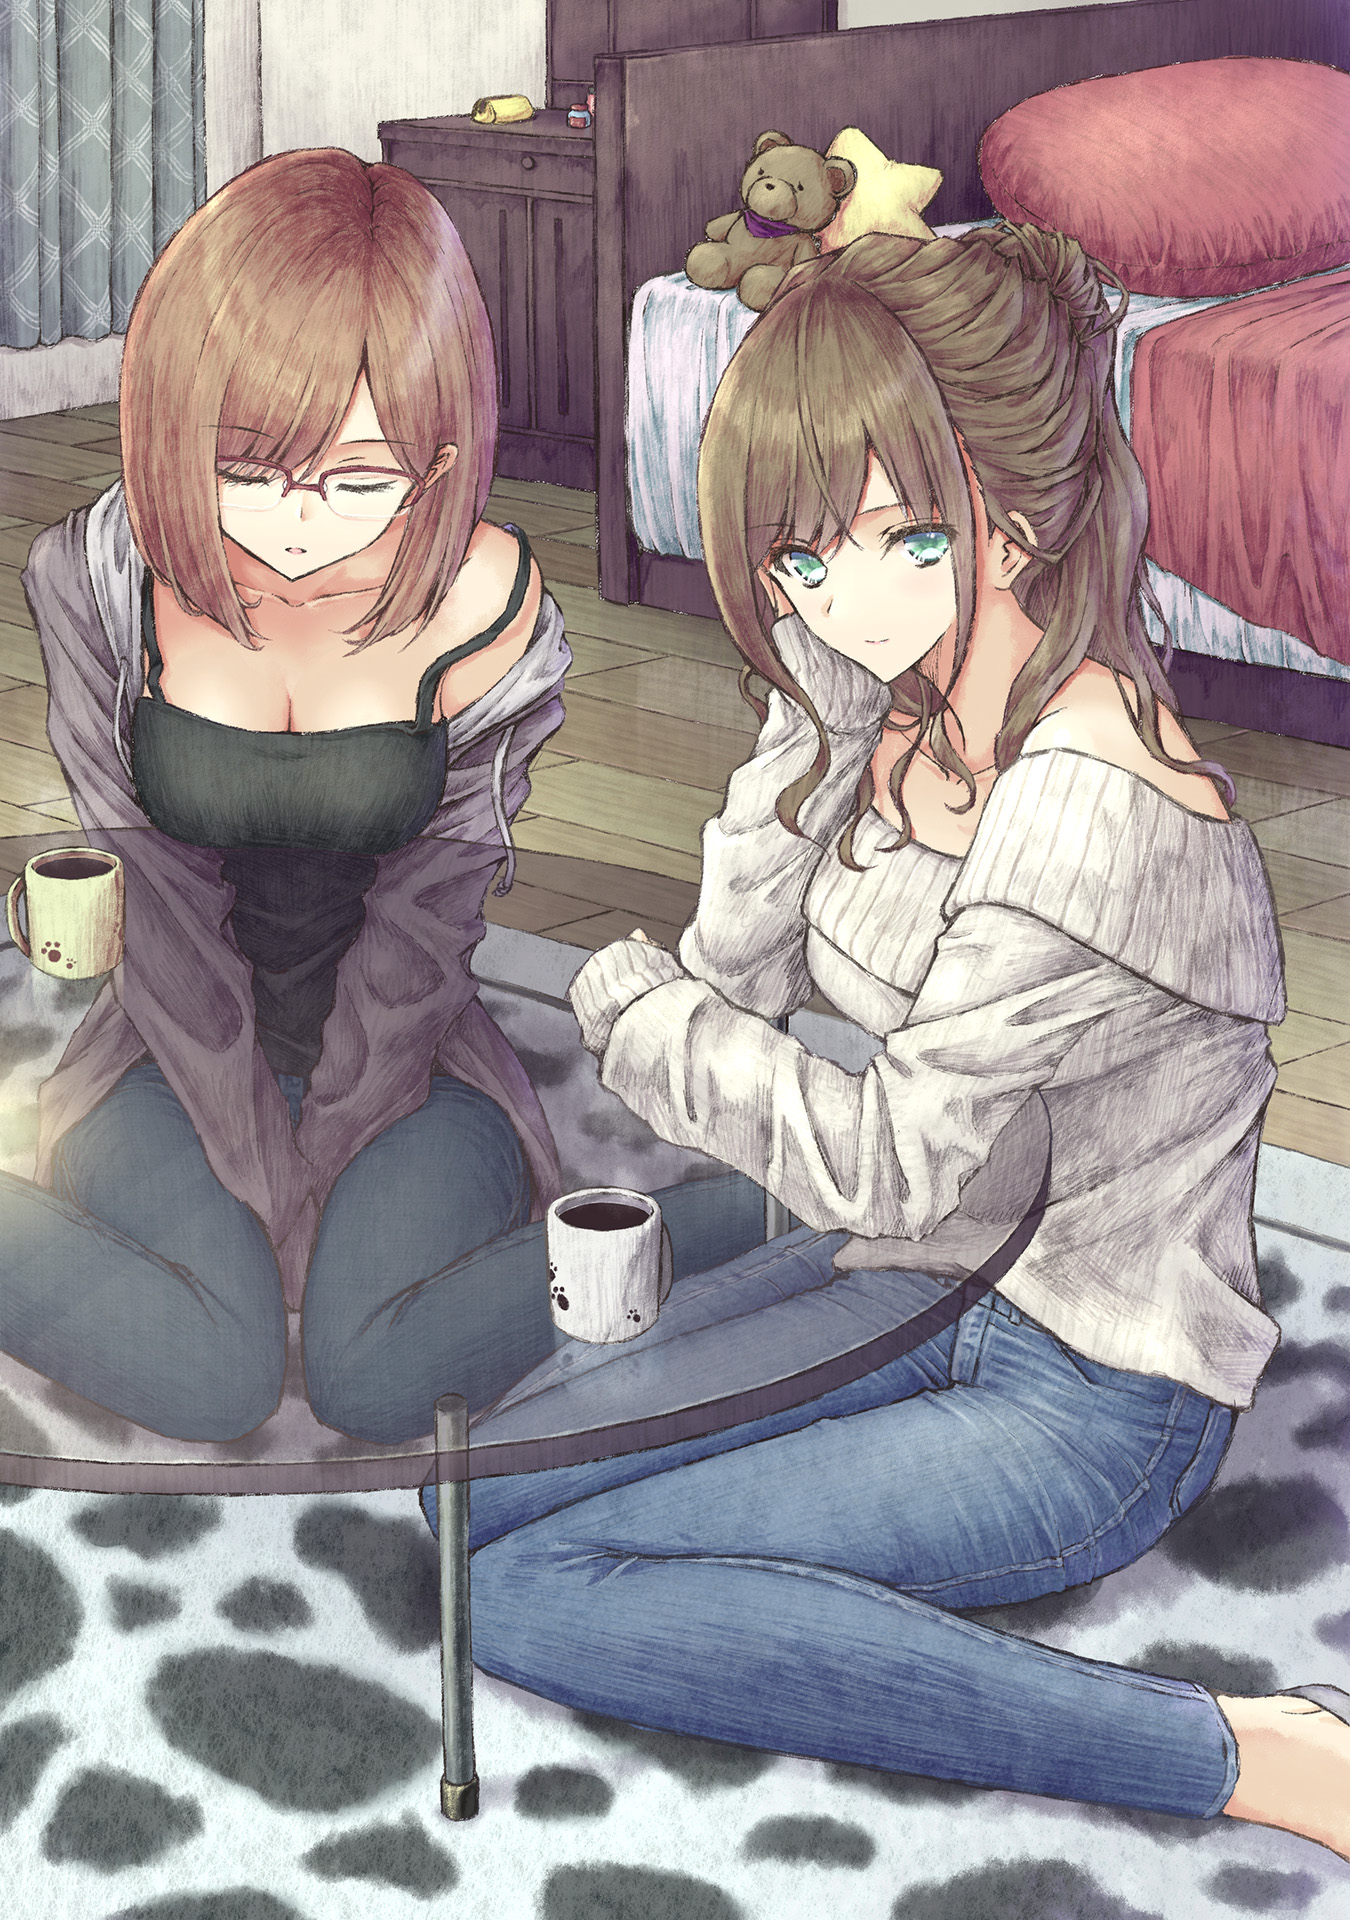 Anime 1350x1920 anime anime girls digital art artwork 2D portrait display Aramachi brunette glasses sweater jeans cleavage kneeling